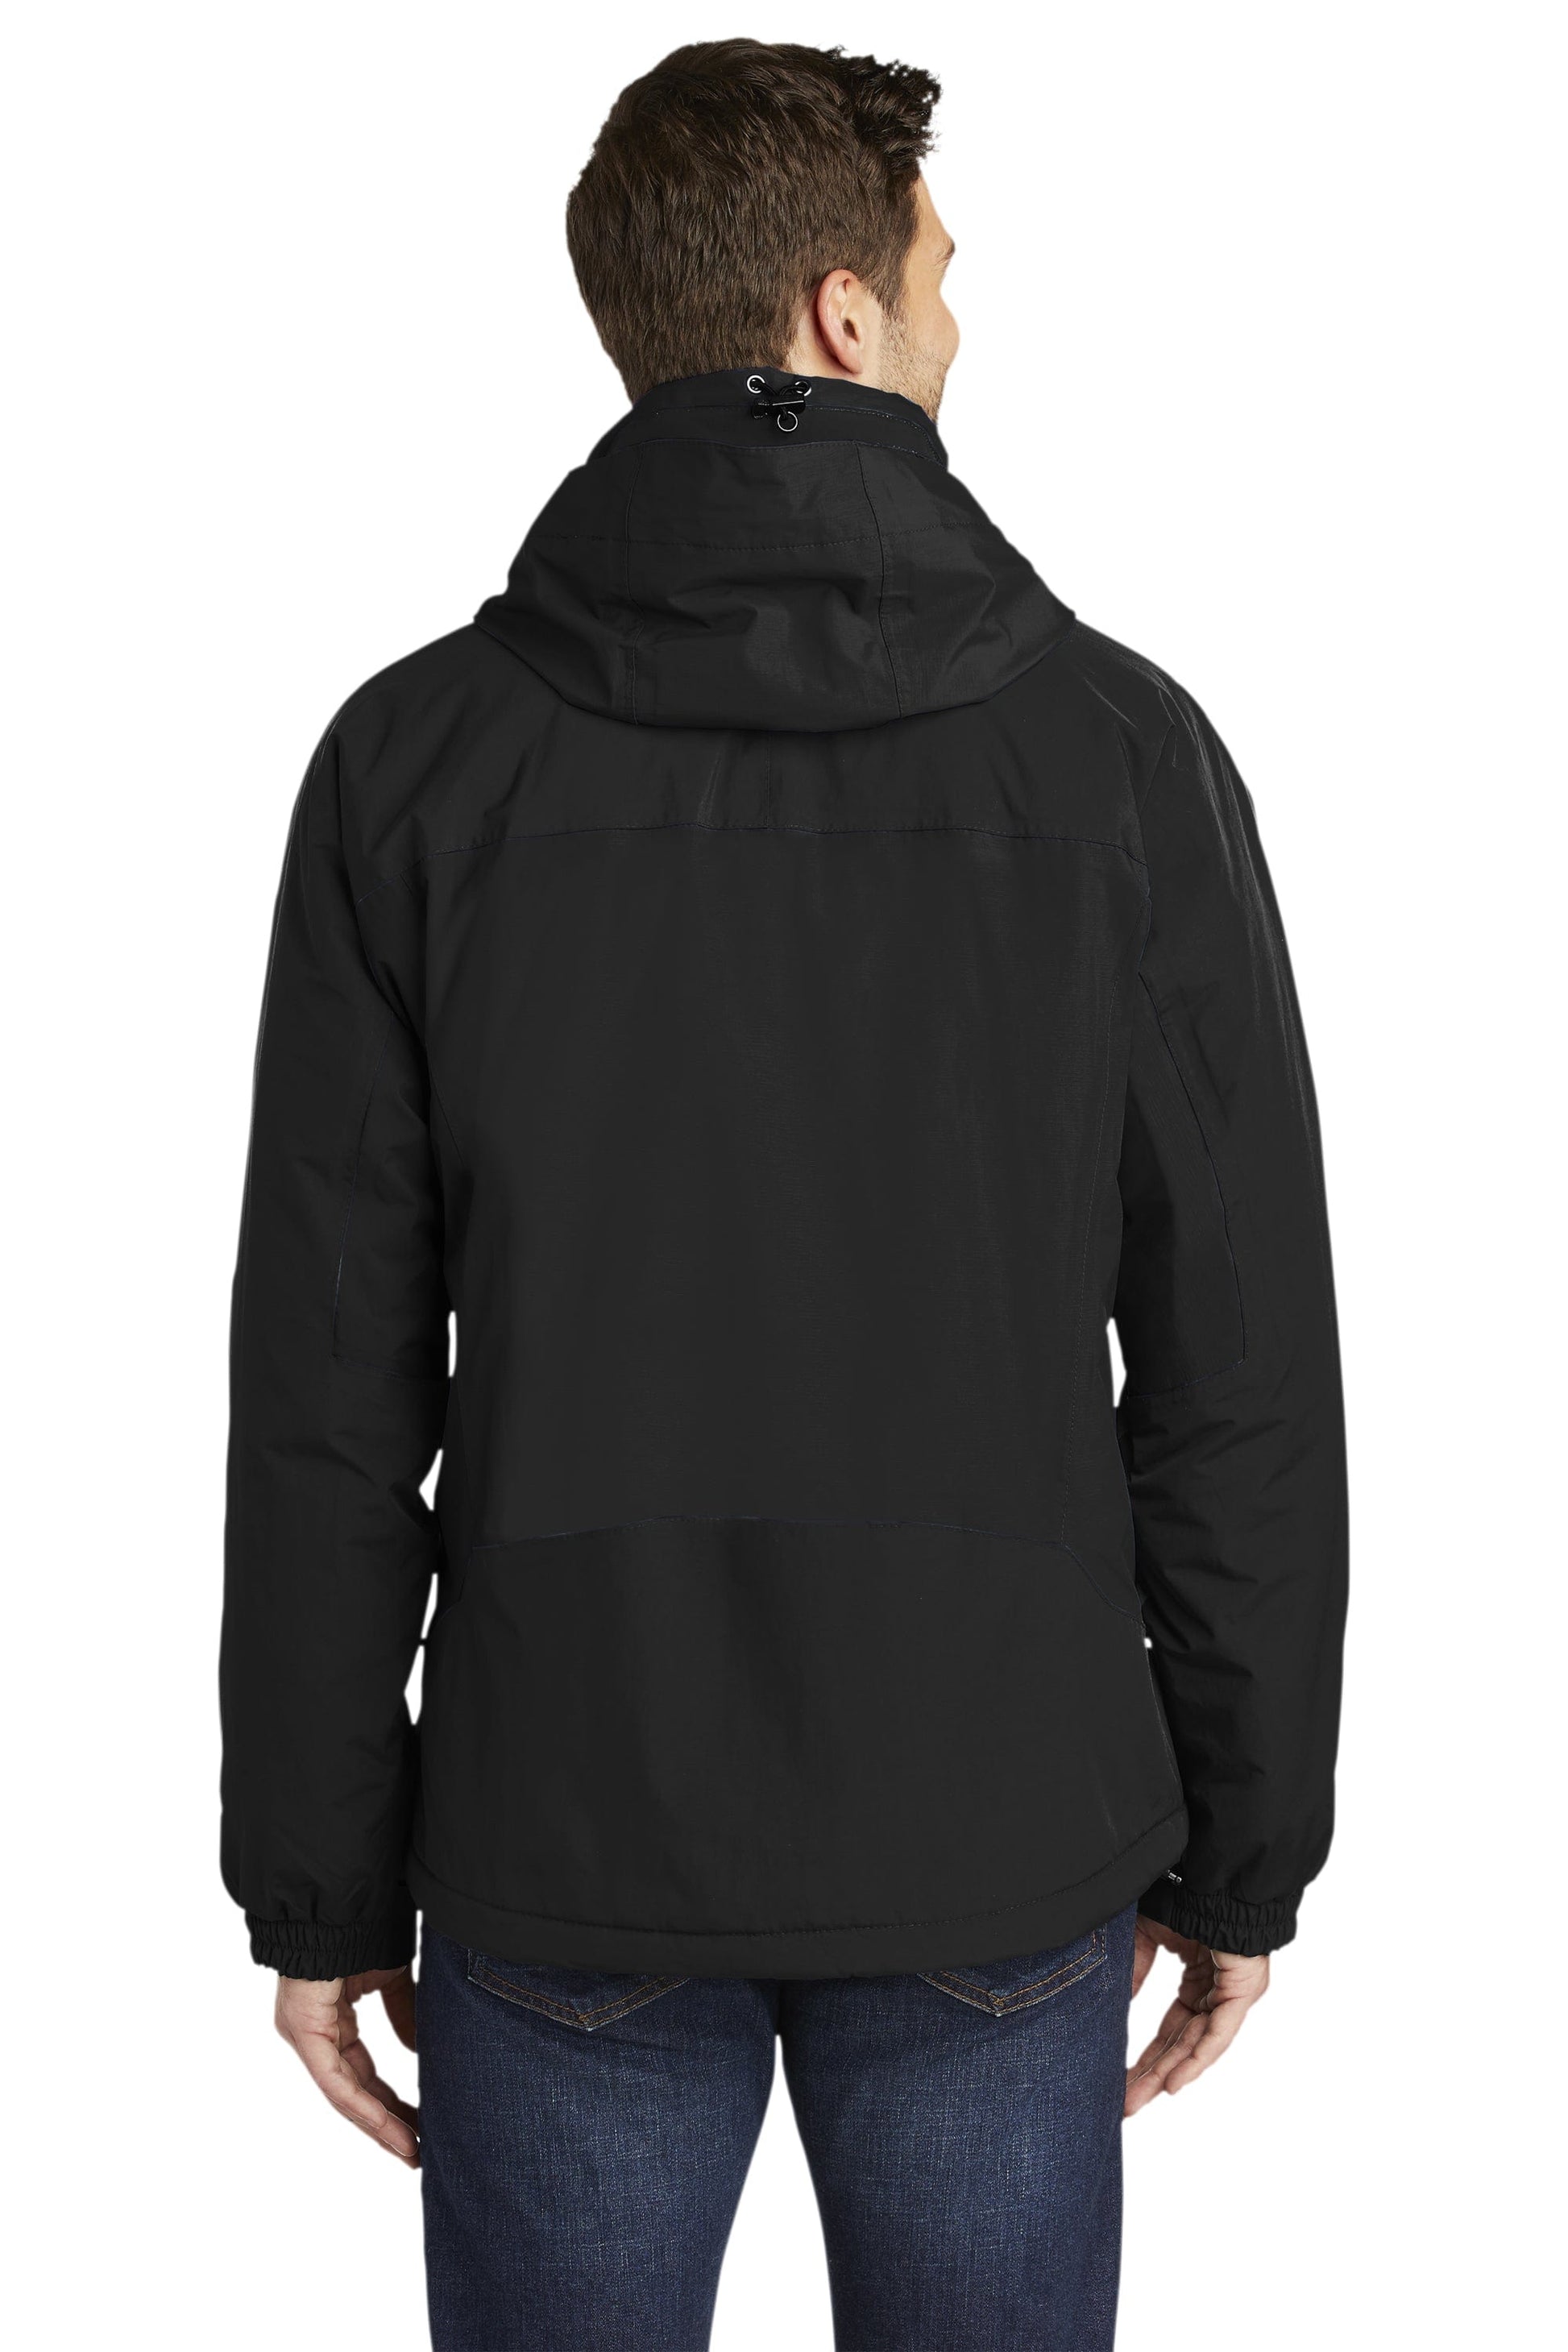 FORtheFIT mens-short-jacket Waterproof Nootka Men's Jacket - 2 Colors Available